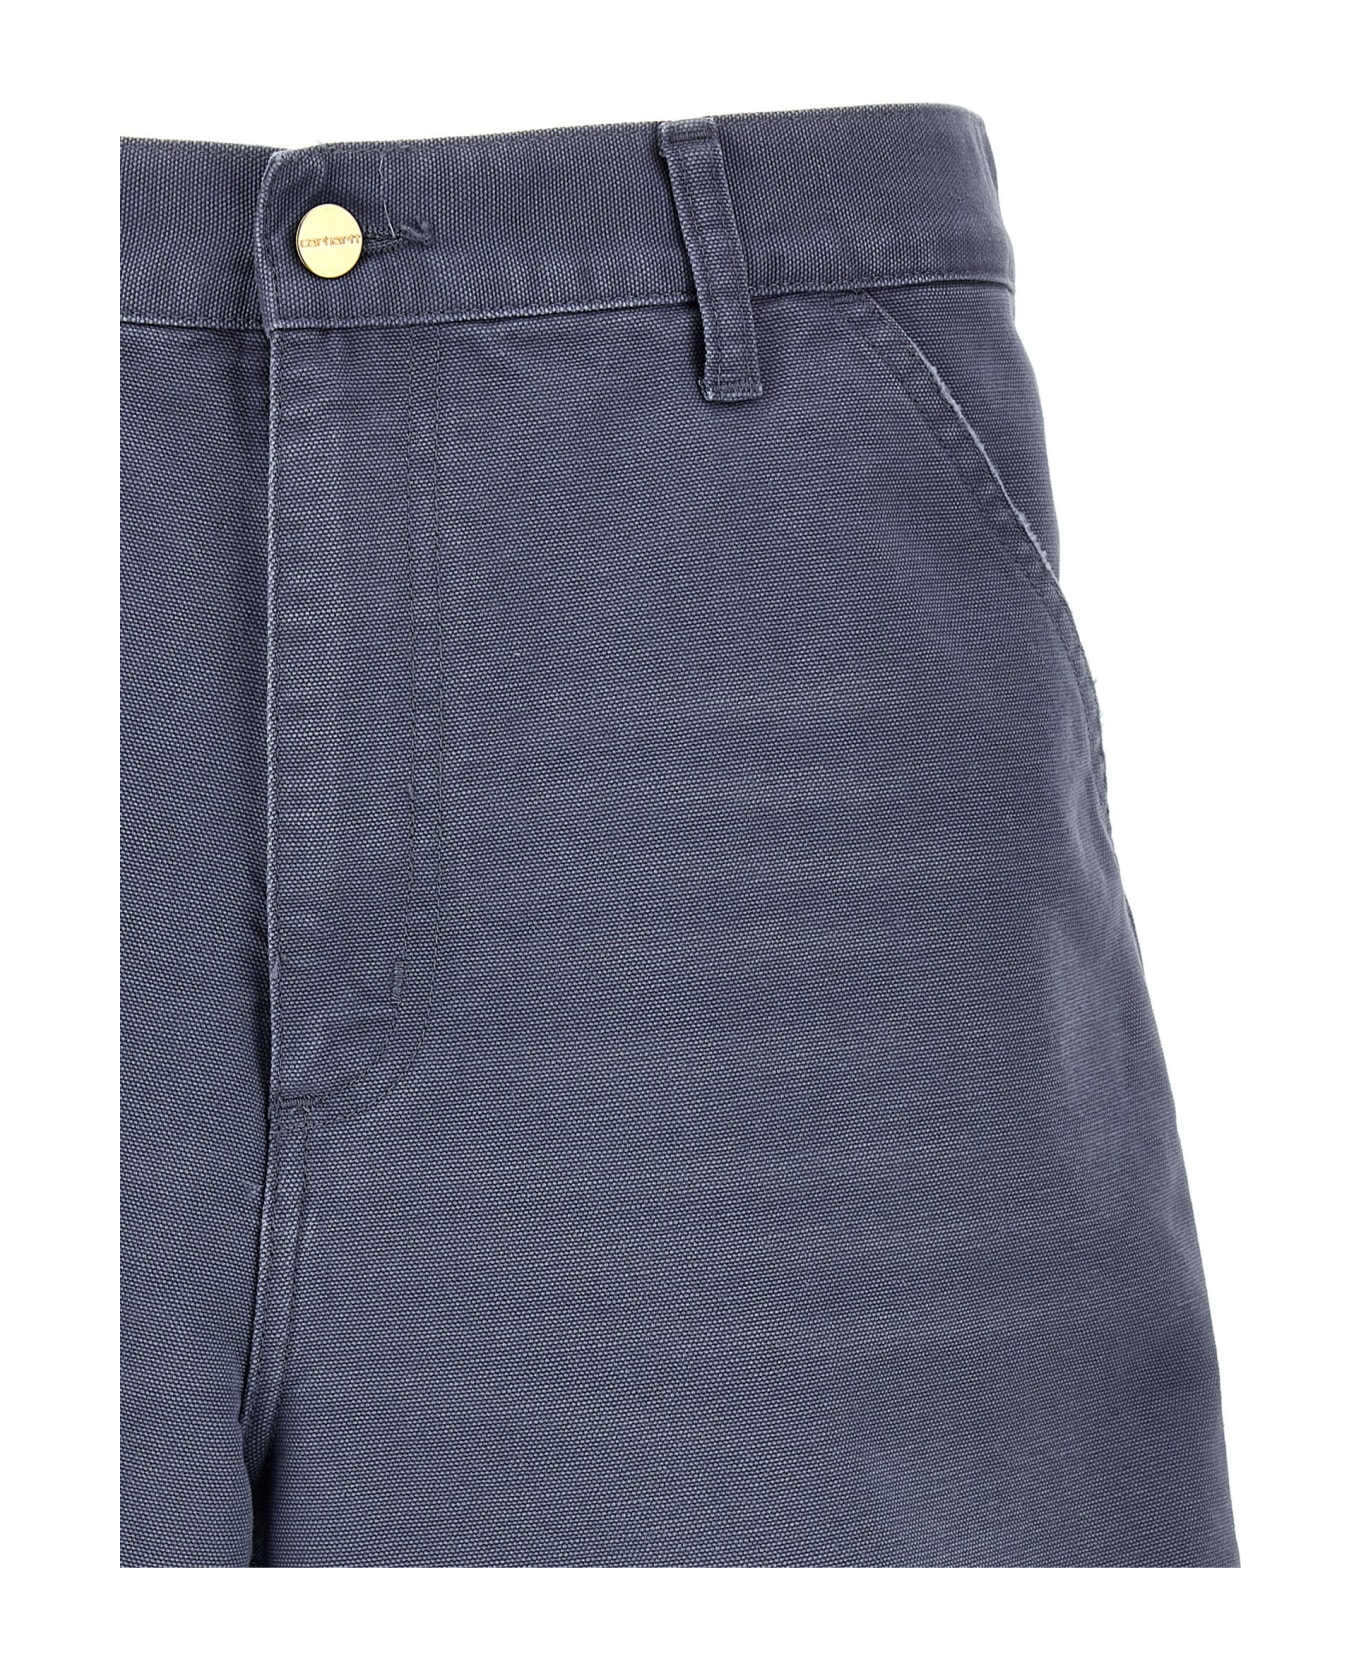 Carhartt 'single Knee' Bermuda Shorts - Light Blue